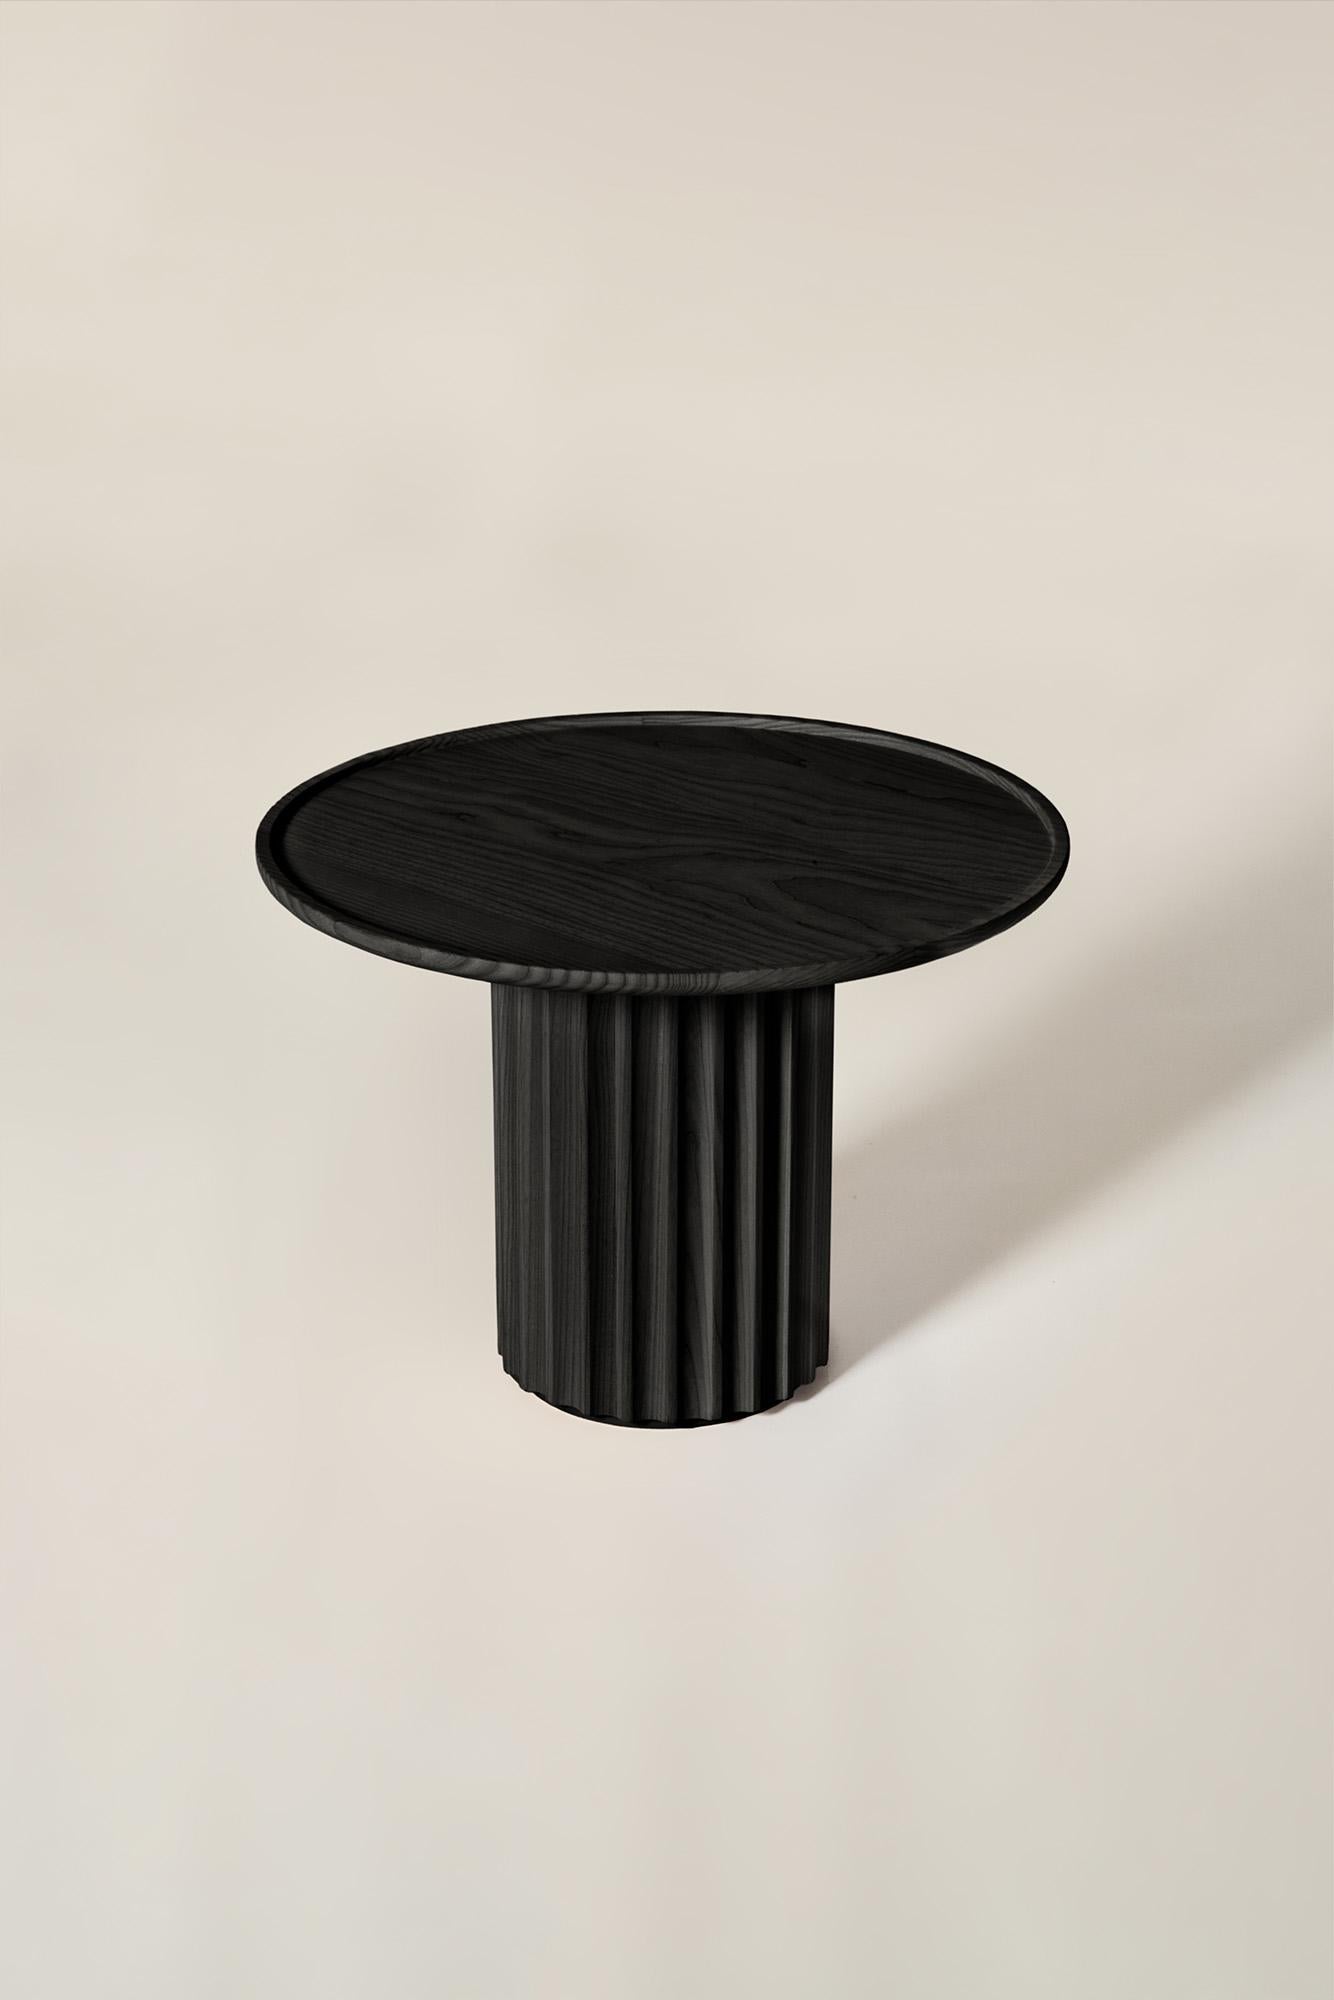 Italian Capitello Solid Wood Coffee Table, Ash in Black Finish, Contemporary For Sale